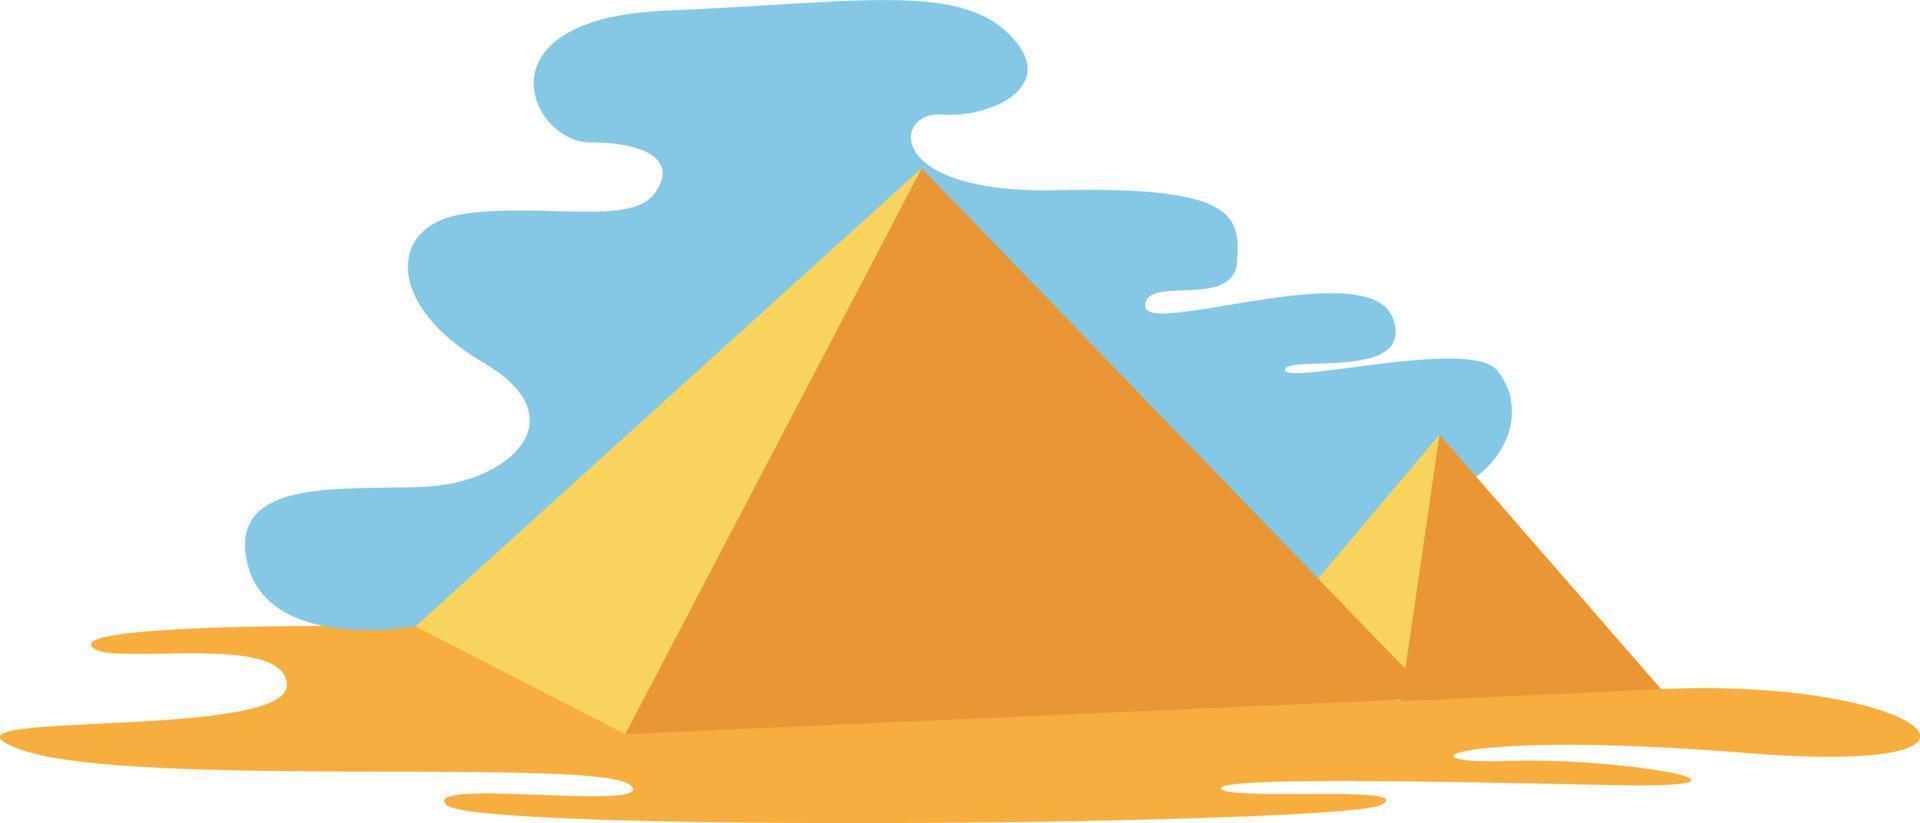 Pyramids, illustration, vector on white background.